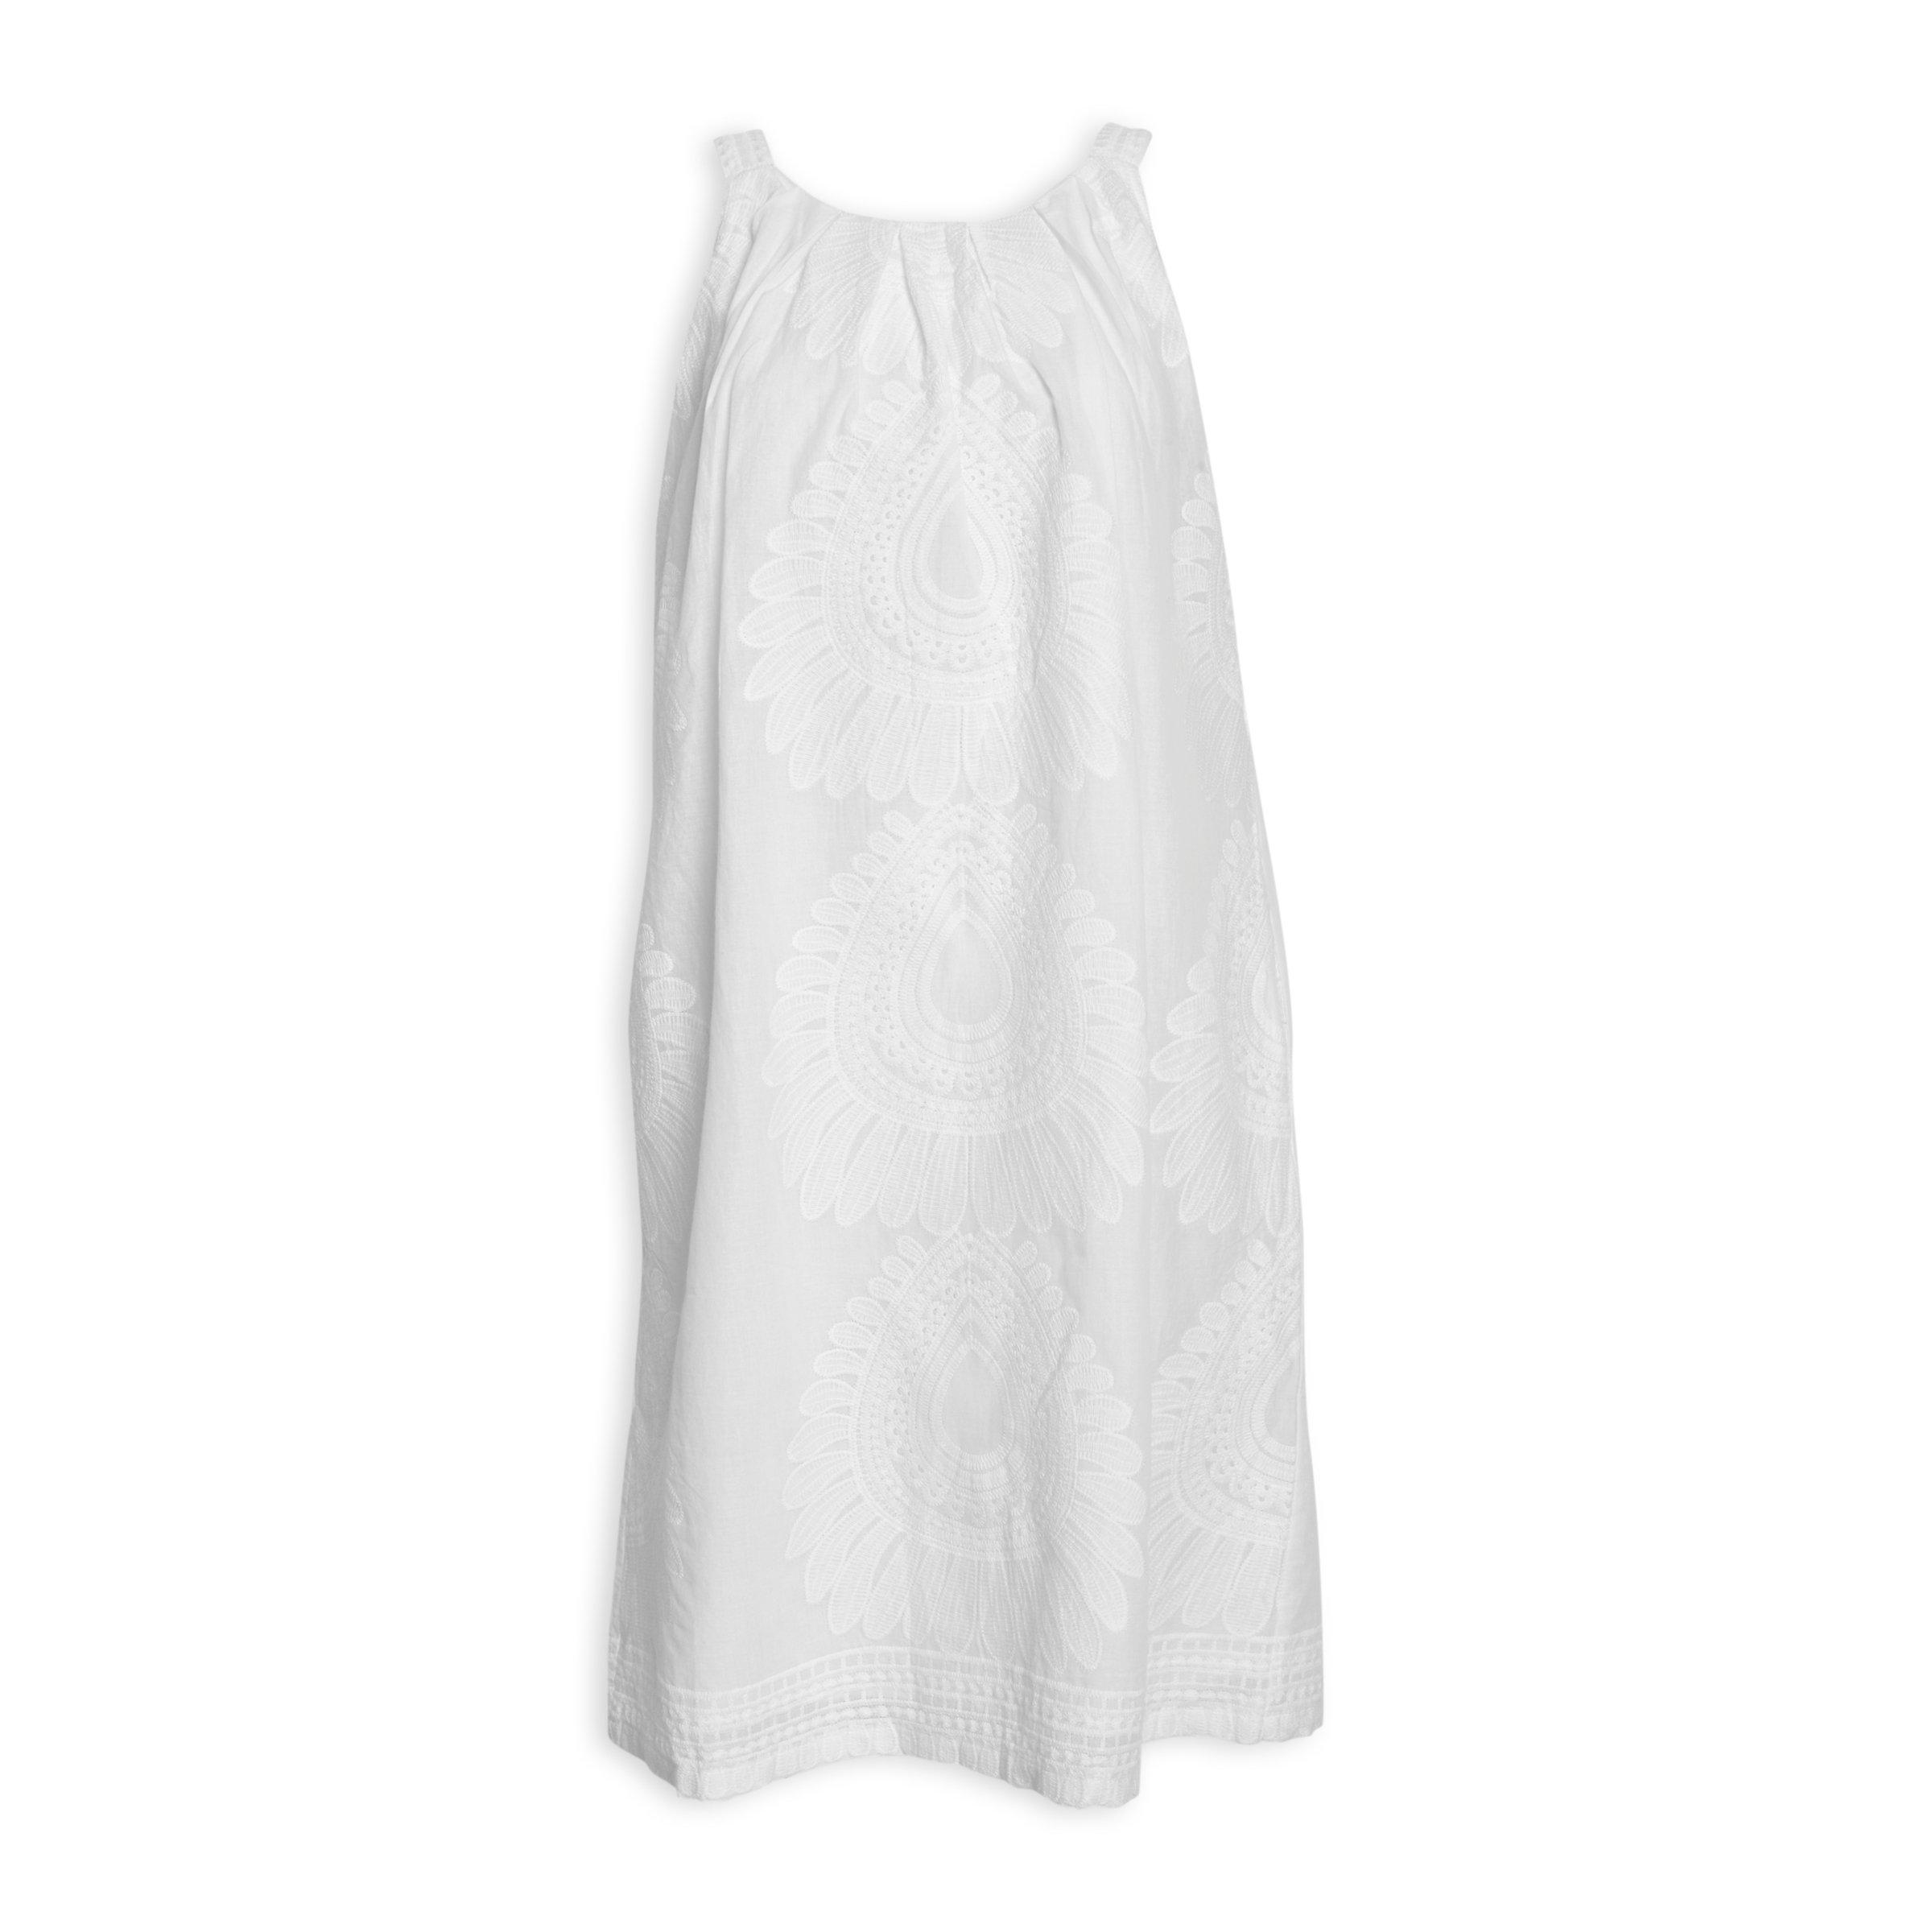 Buy Ginger Mary White Sheath Dress Online | Truworths